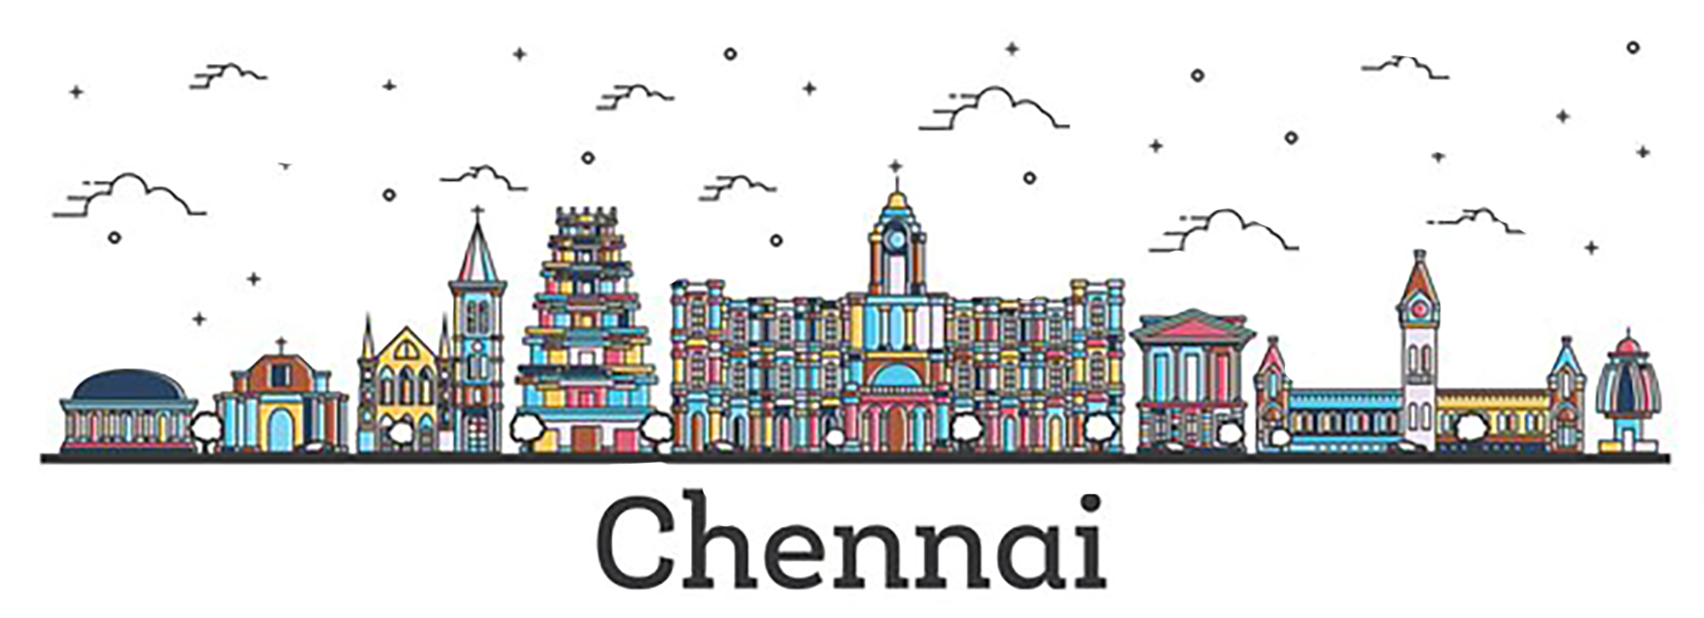 Chennai image